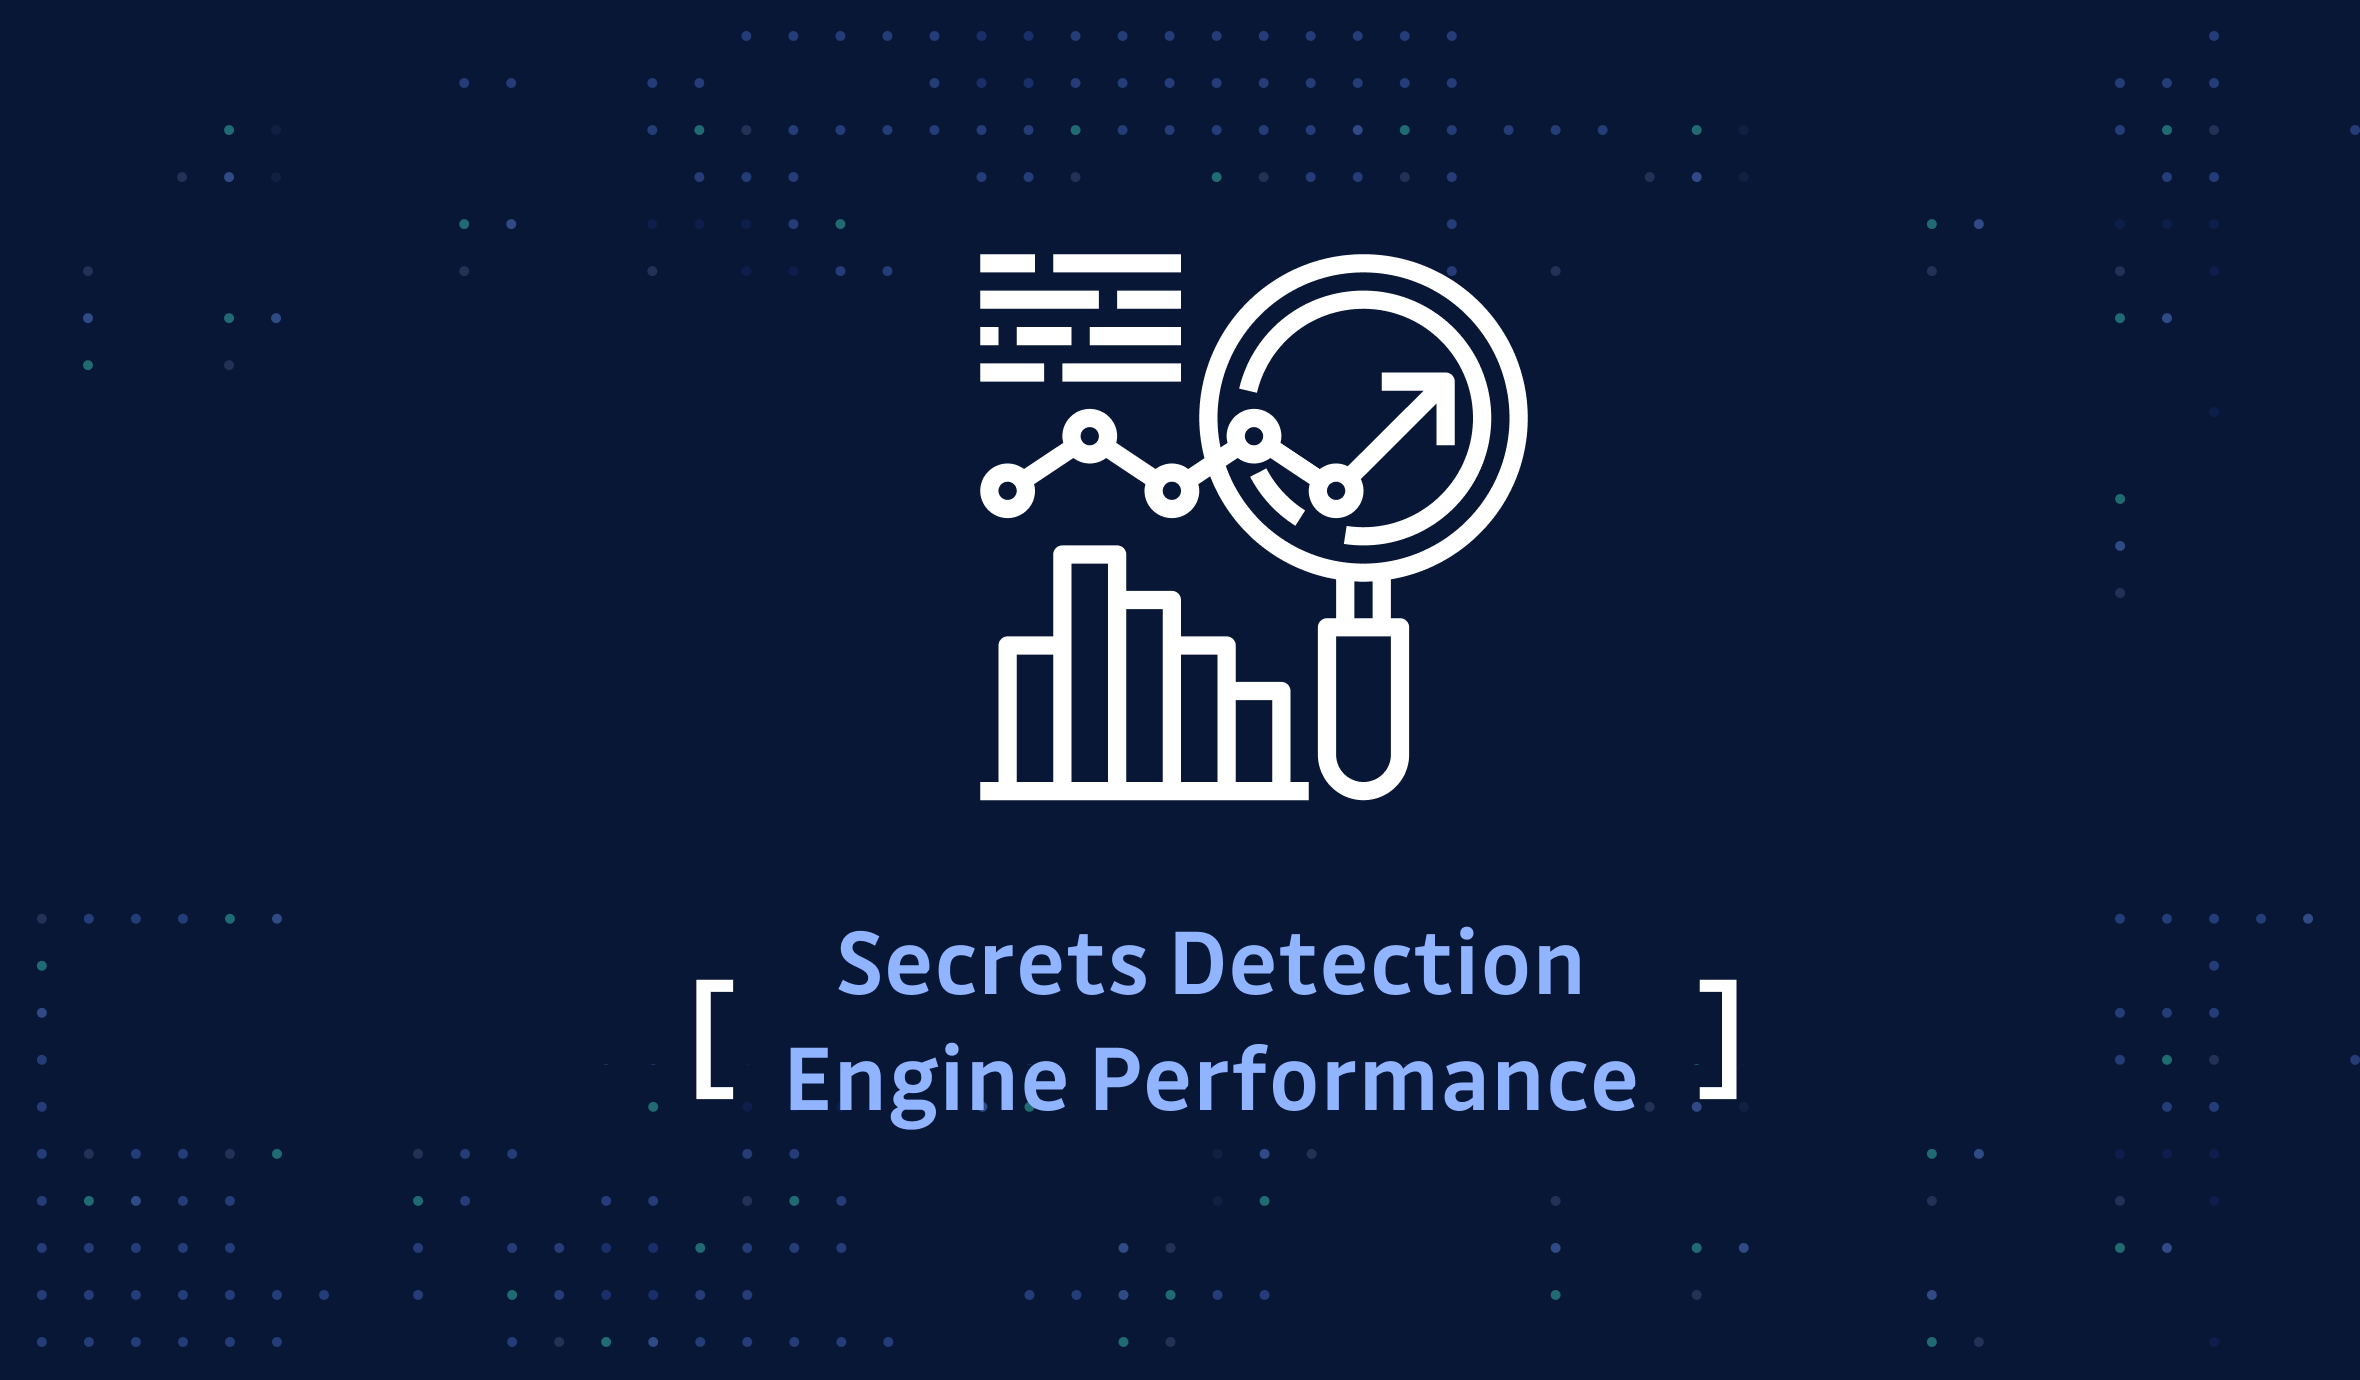 Secrets Detection - Optimizing filter processes